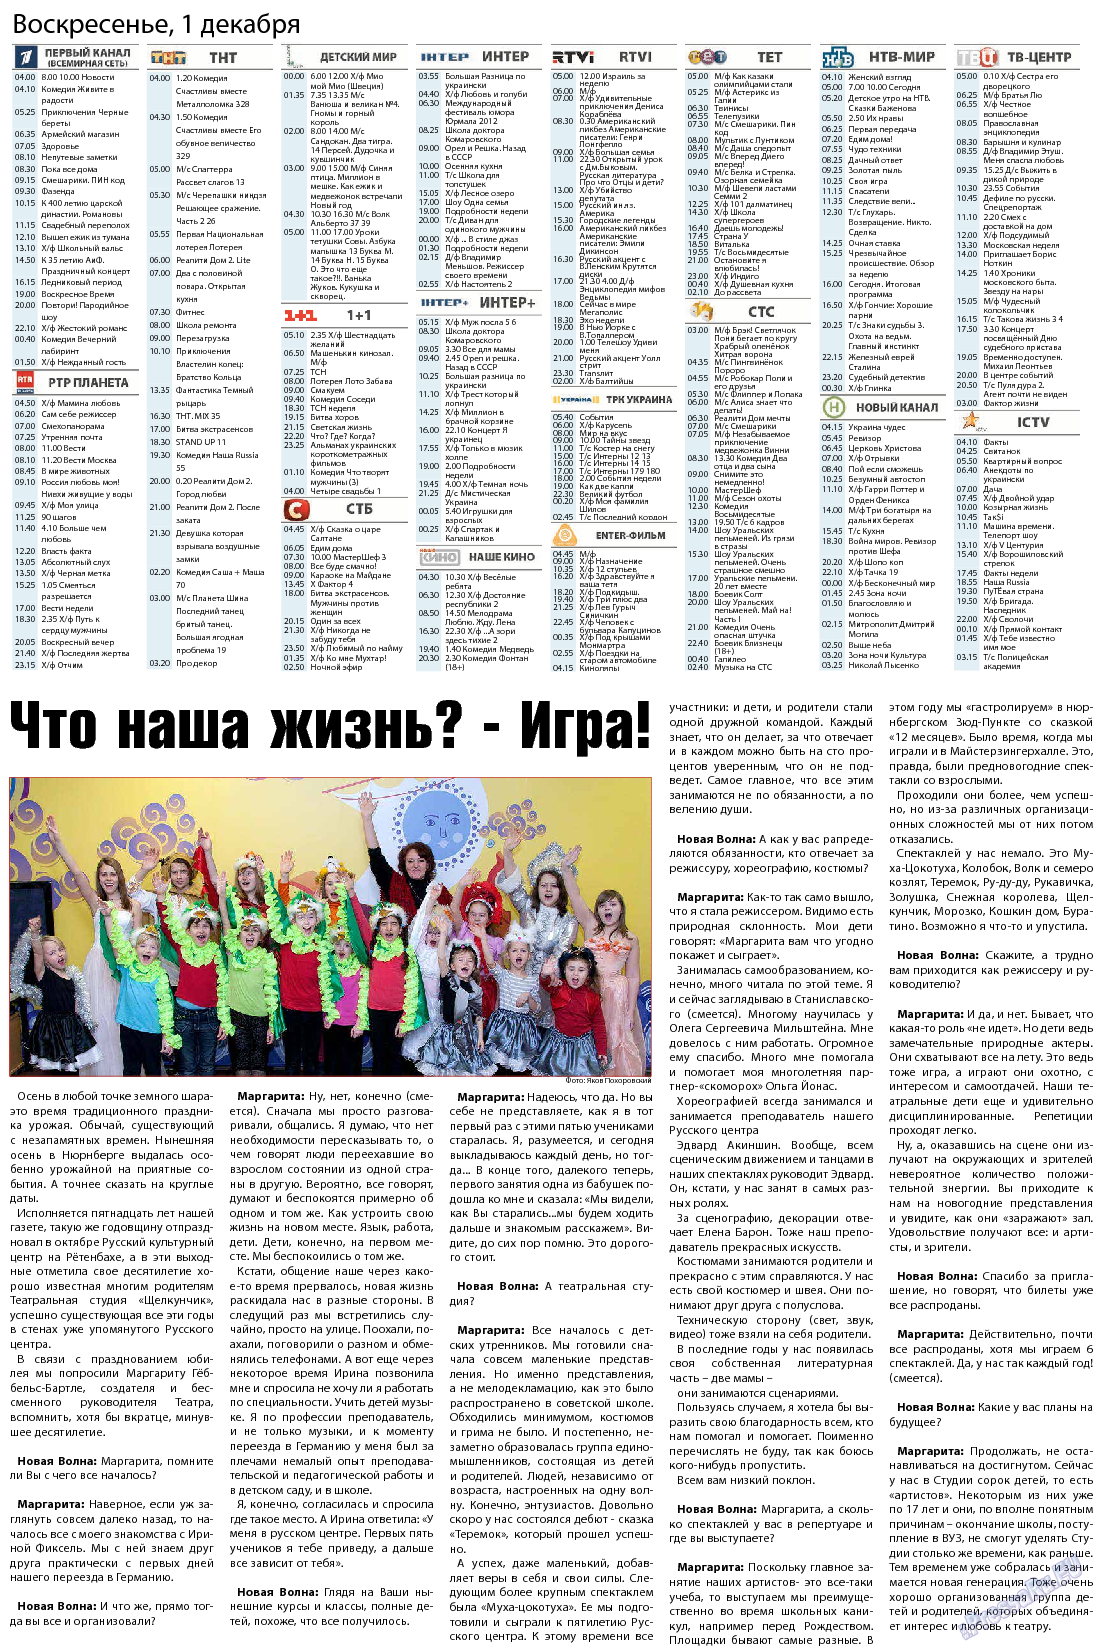 Новая Wолна, газета. 2013 №47 стр.6